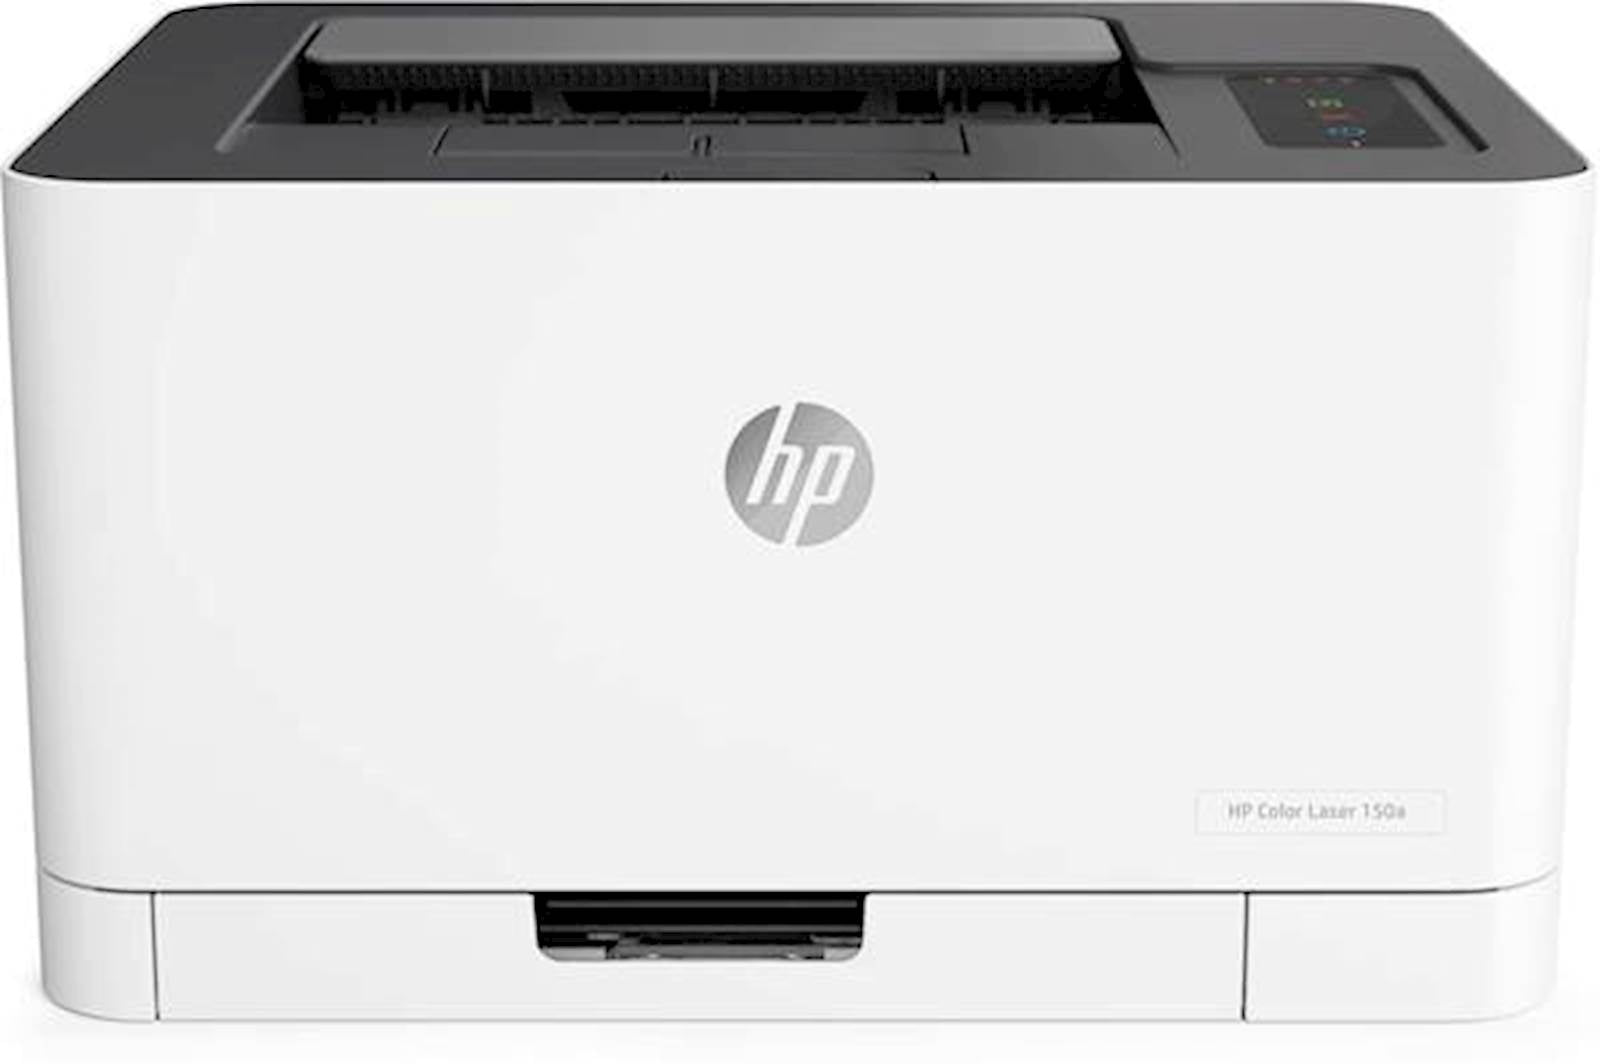 Printer HP Color LaserJet 150a USB